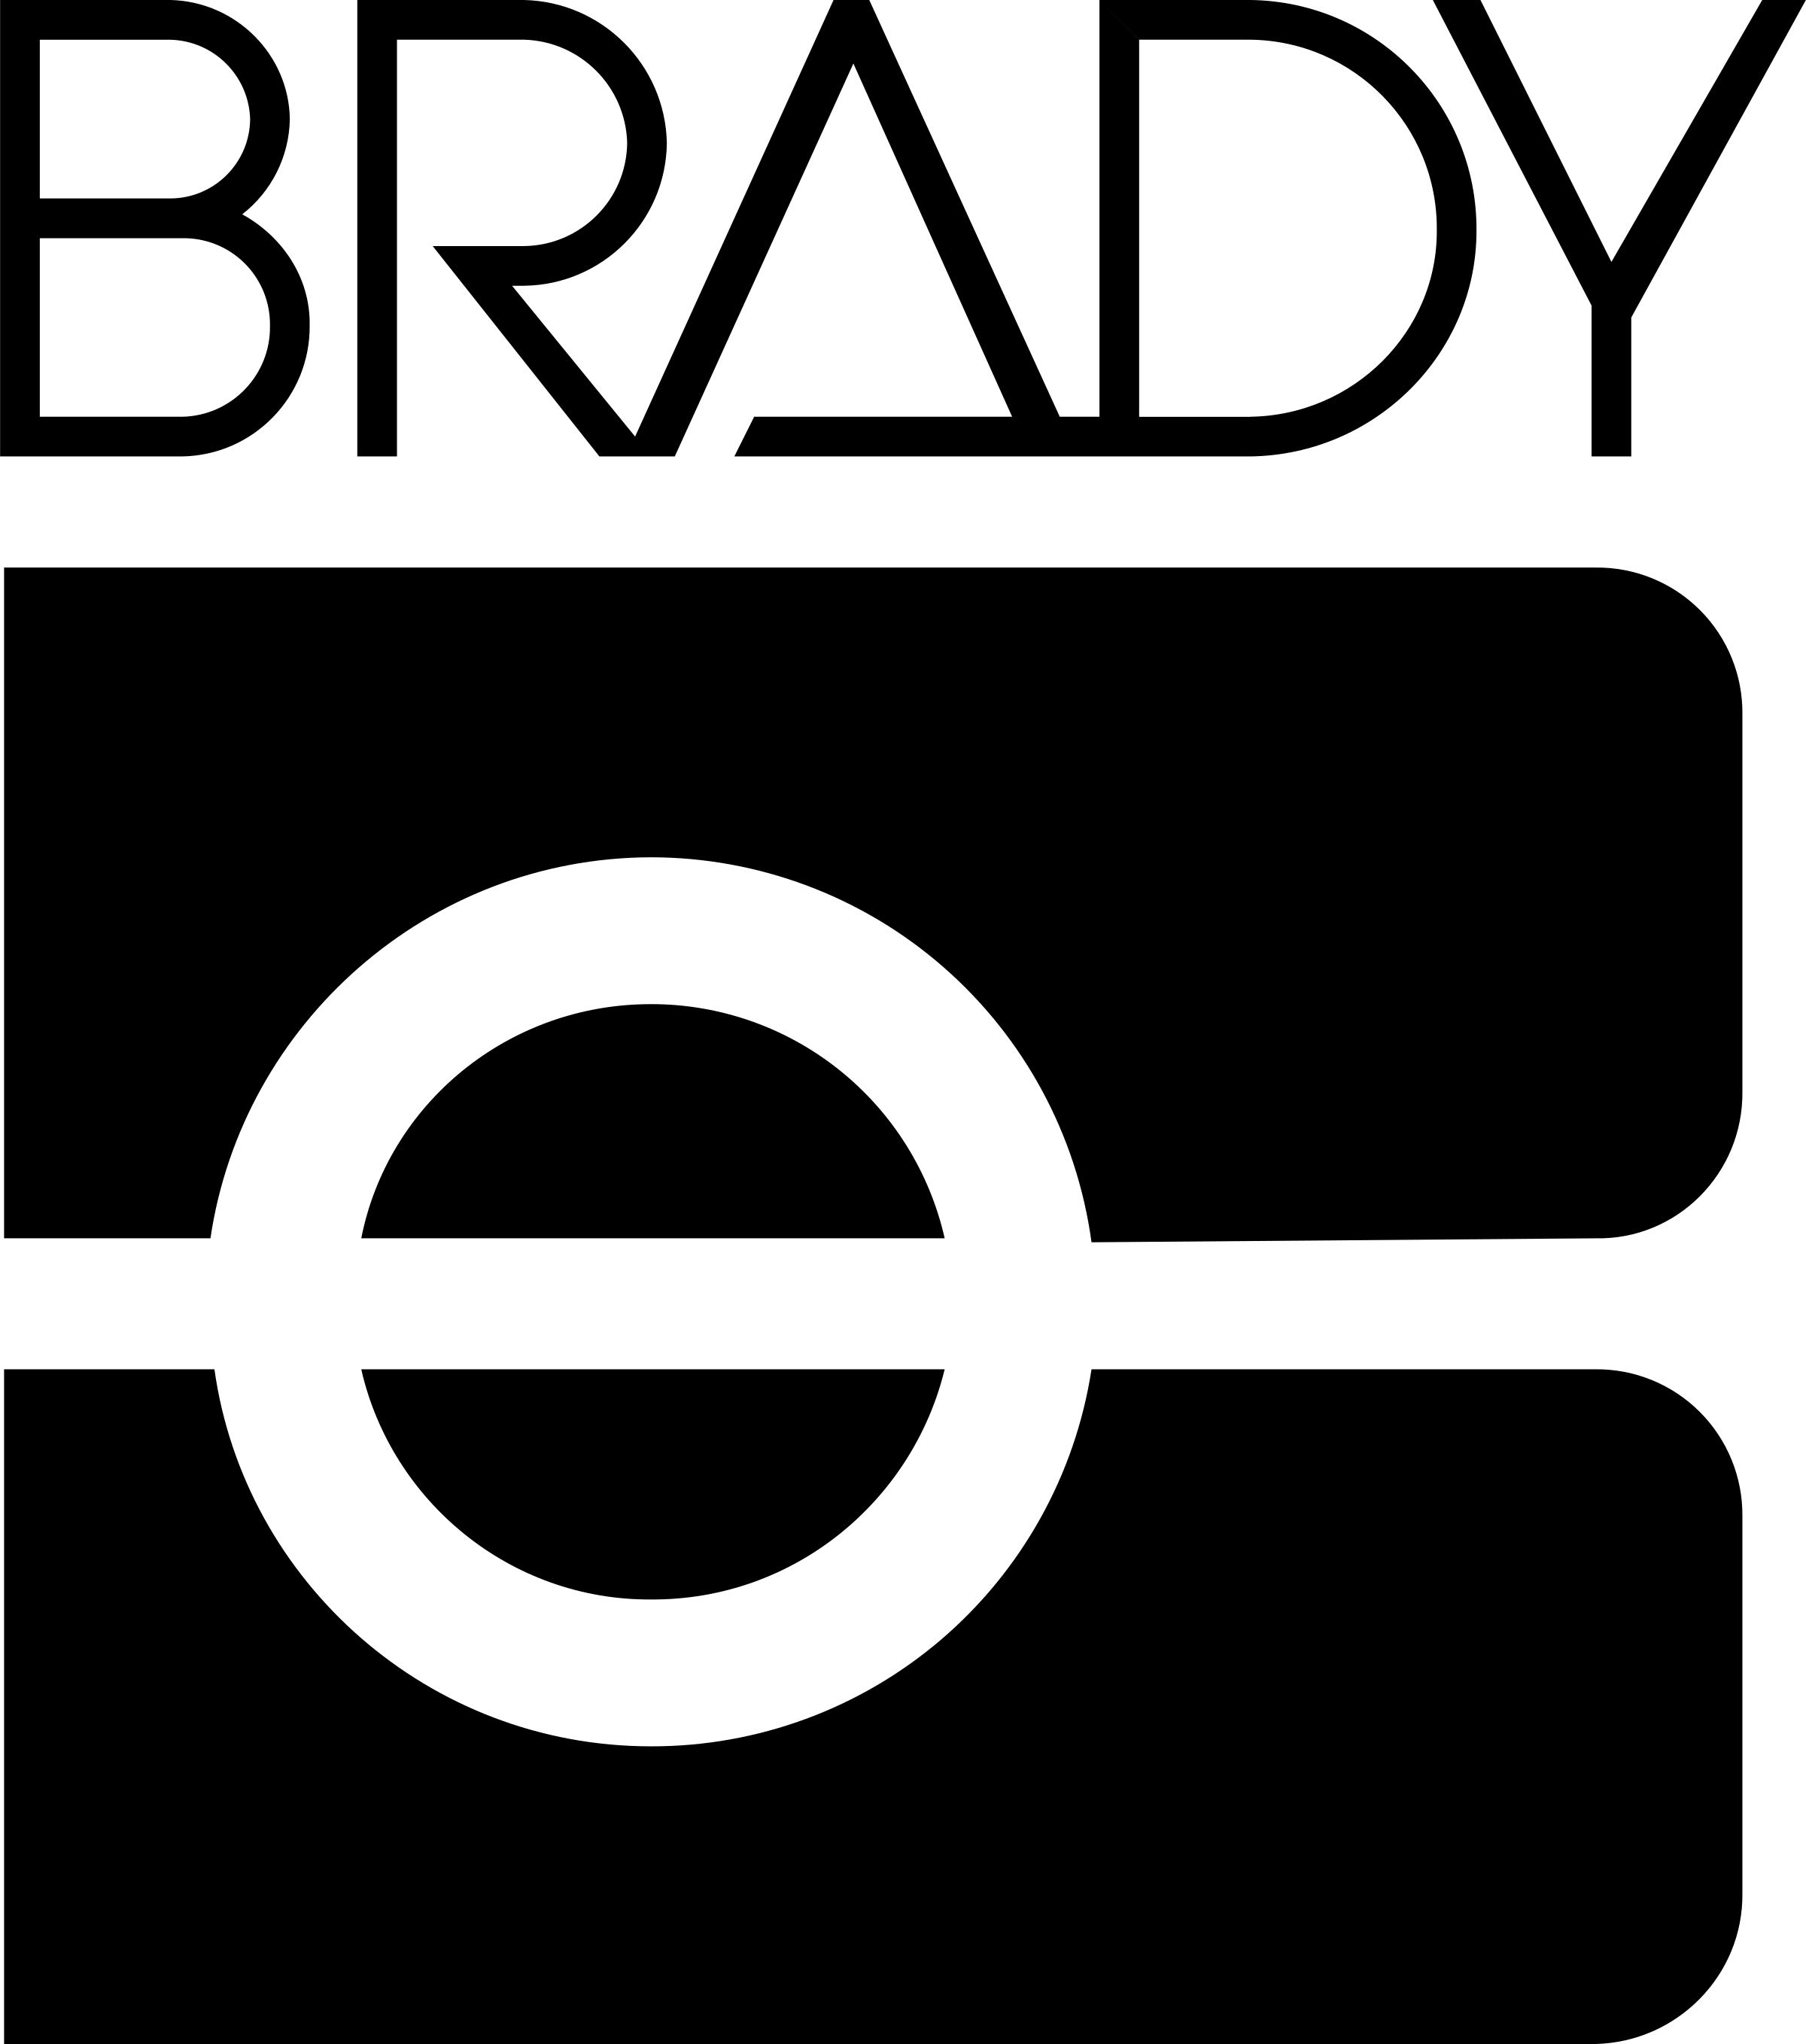 Brady Logo - BRADY Logo PNG Transparent & SVG Vector - Freebie Supply